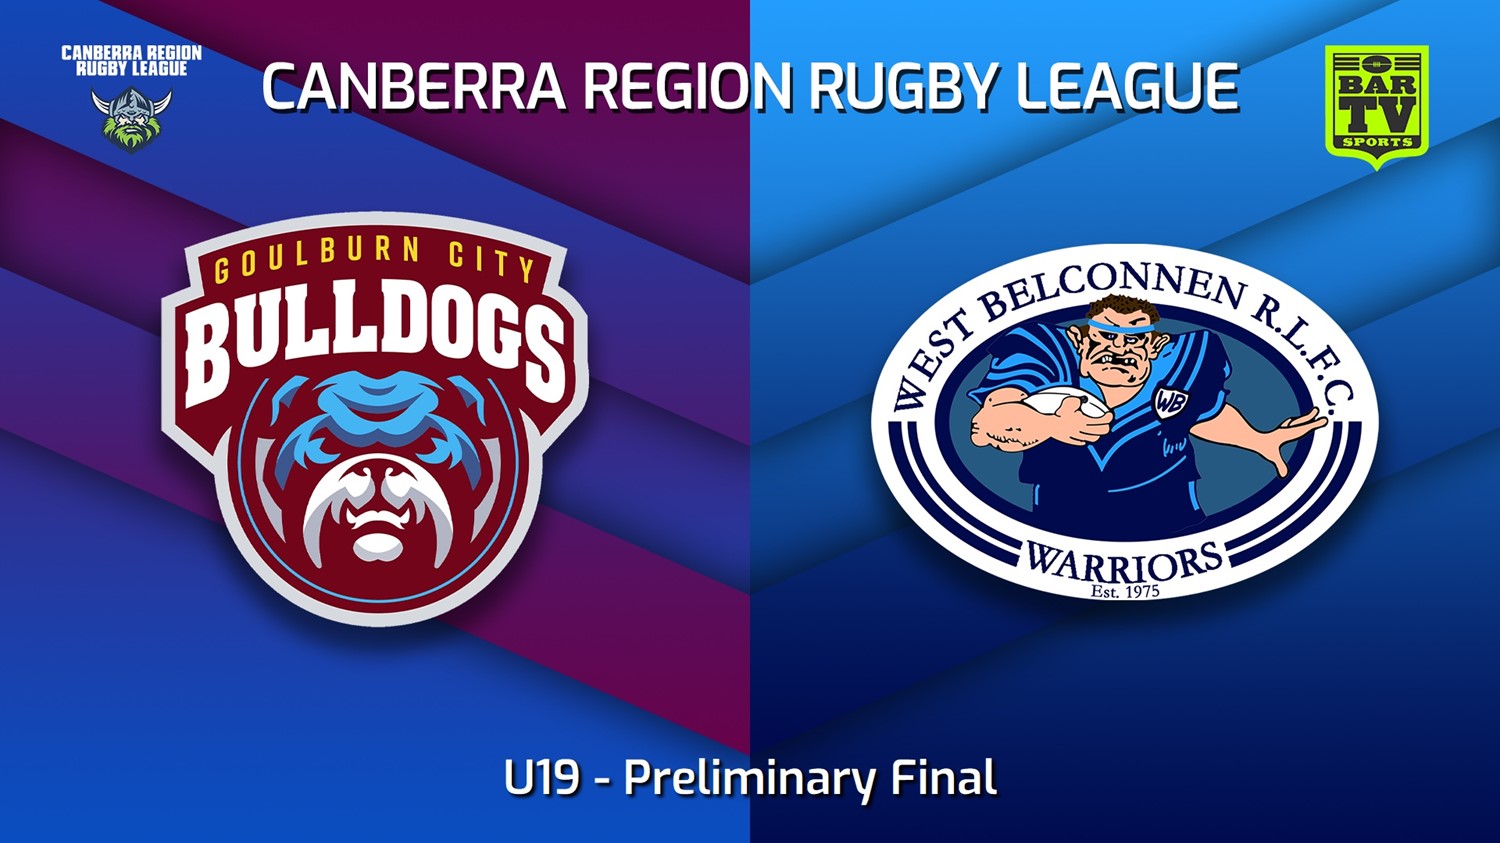 230910-Canberra Preliminary Final - U19 - Goulburn City Bulldogs v West Belconnen Warriors Slate Image